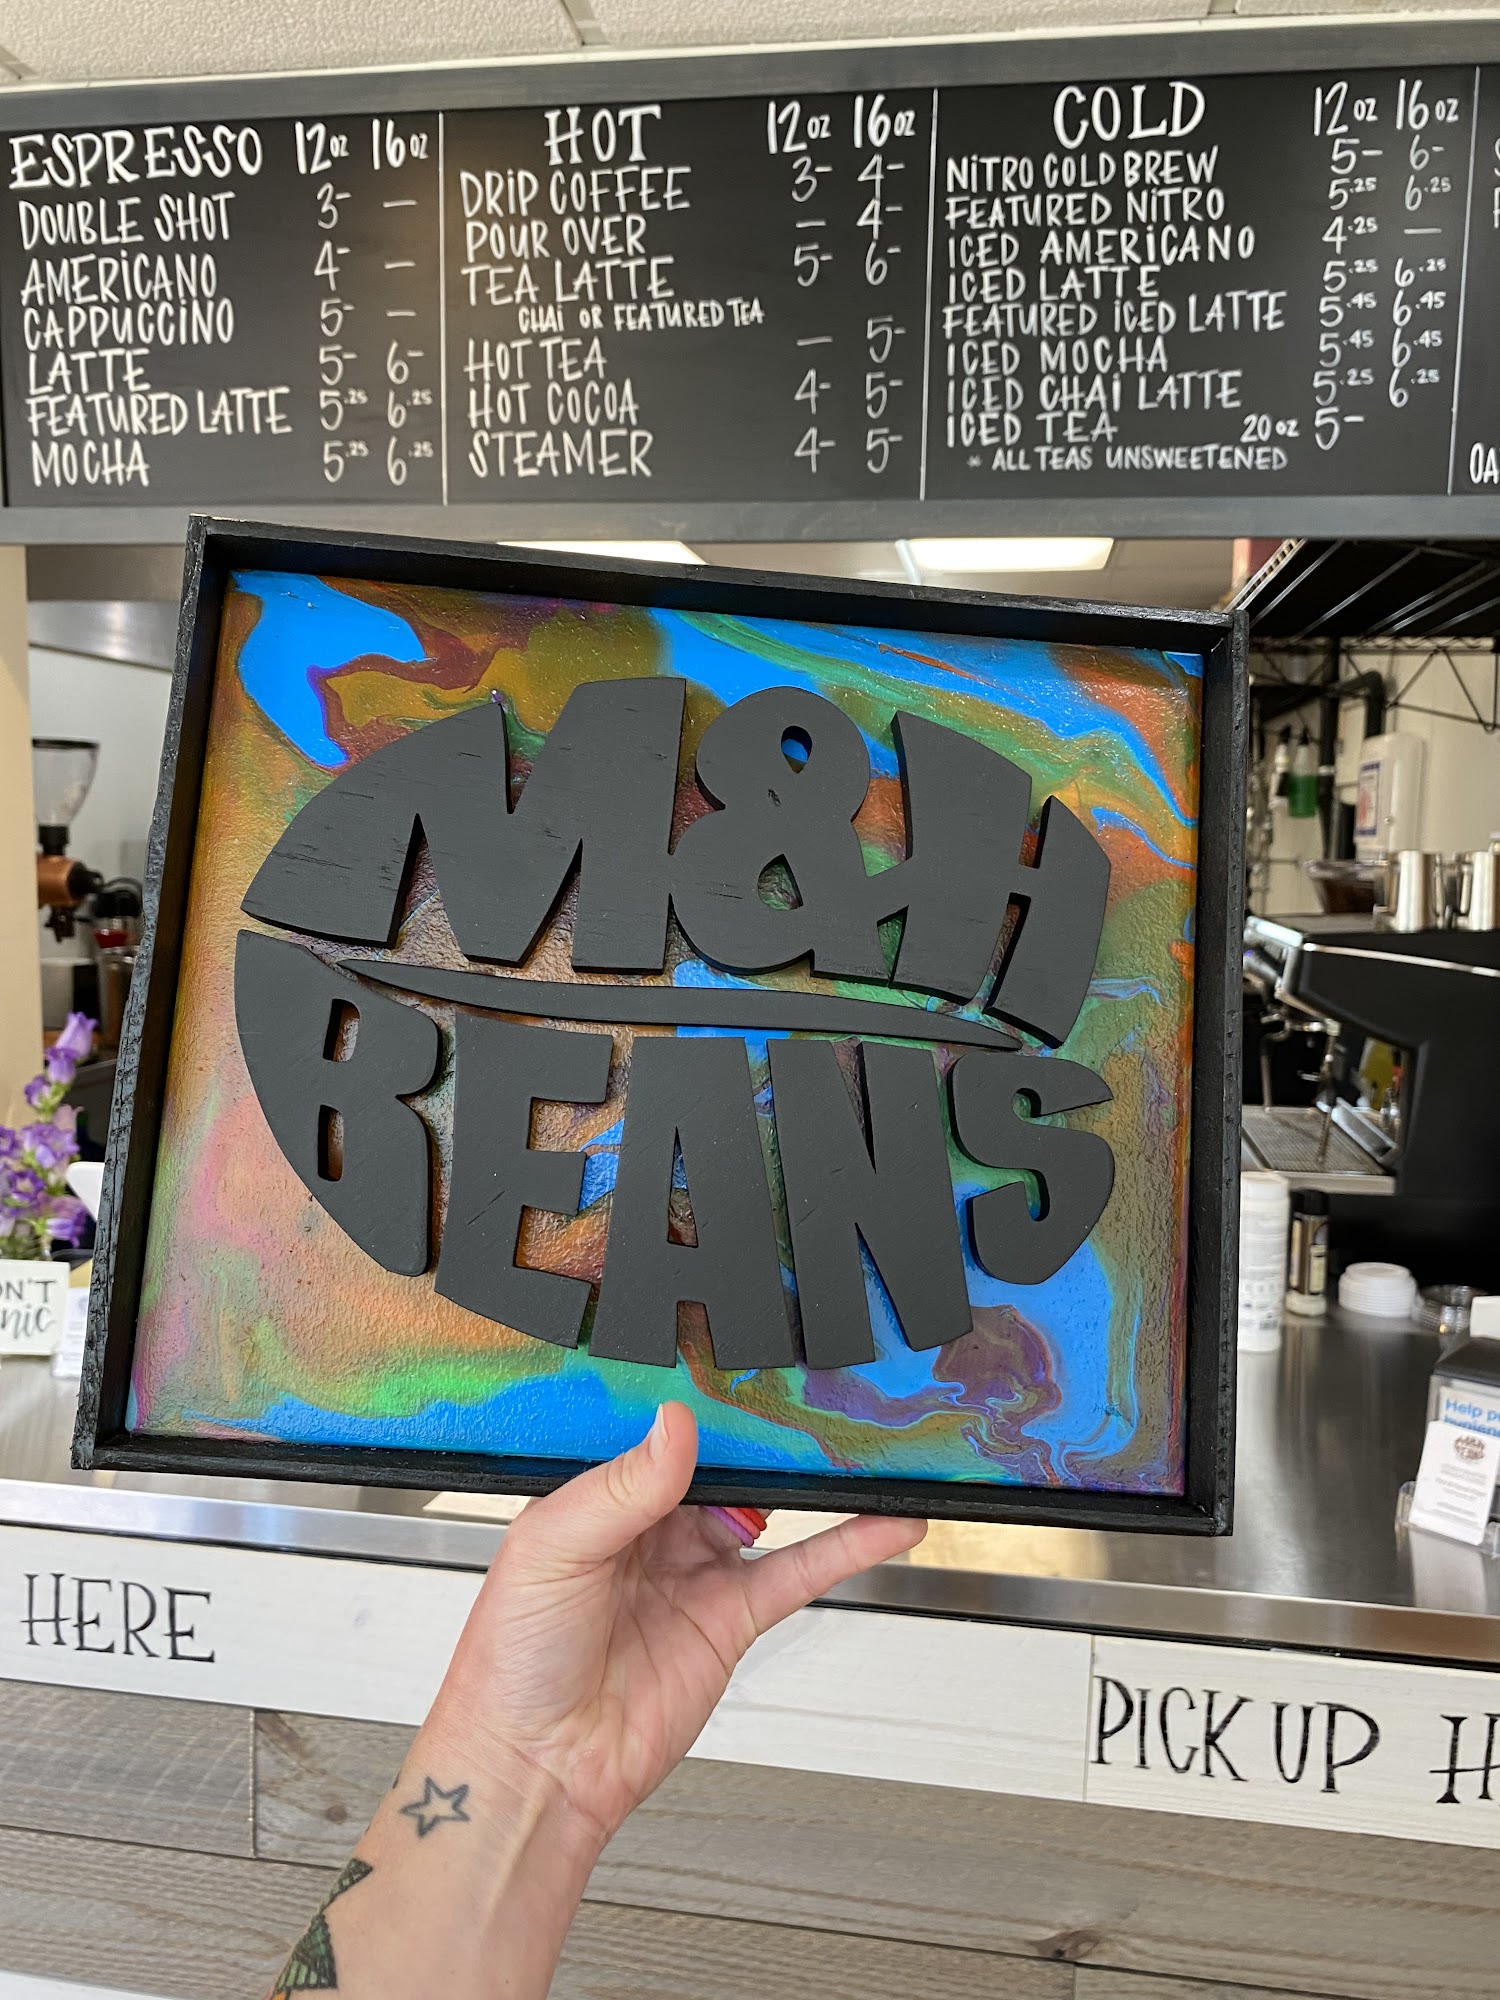 M&H Beans Coffee Roastery